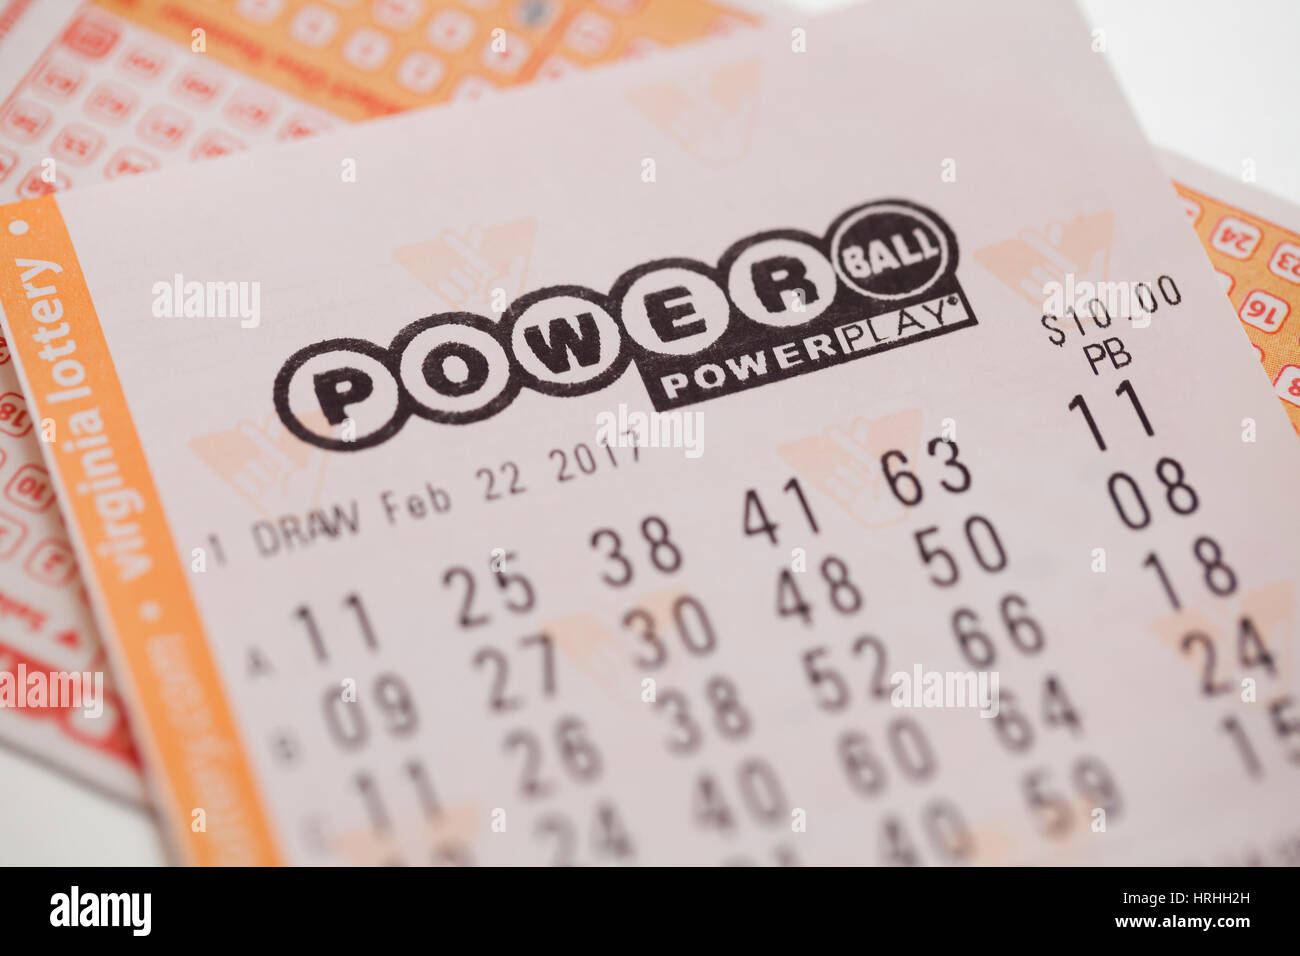 Power Ball lottery ticket - USA Stock Photo